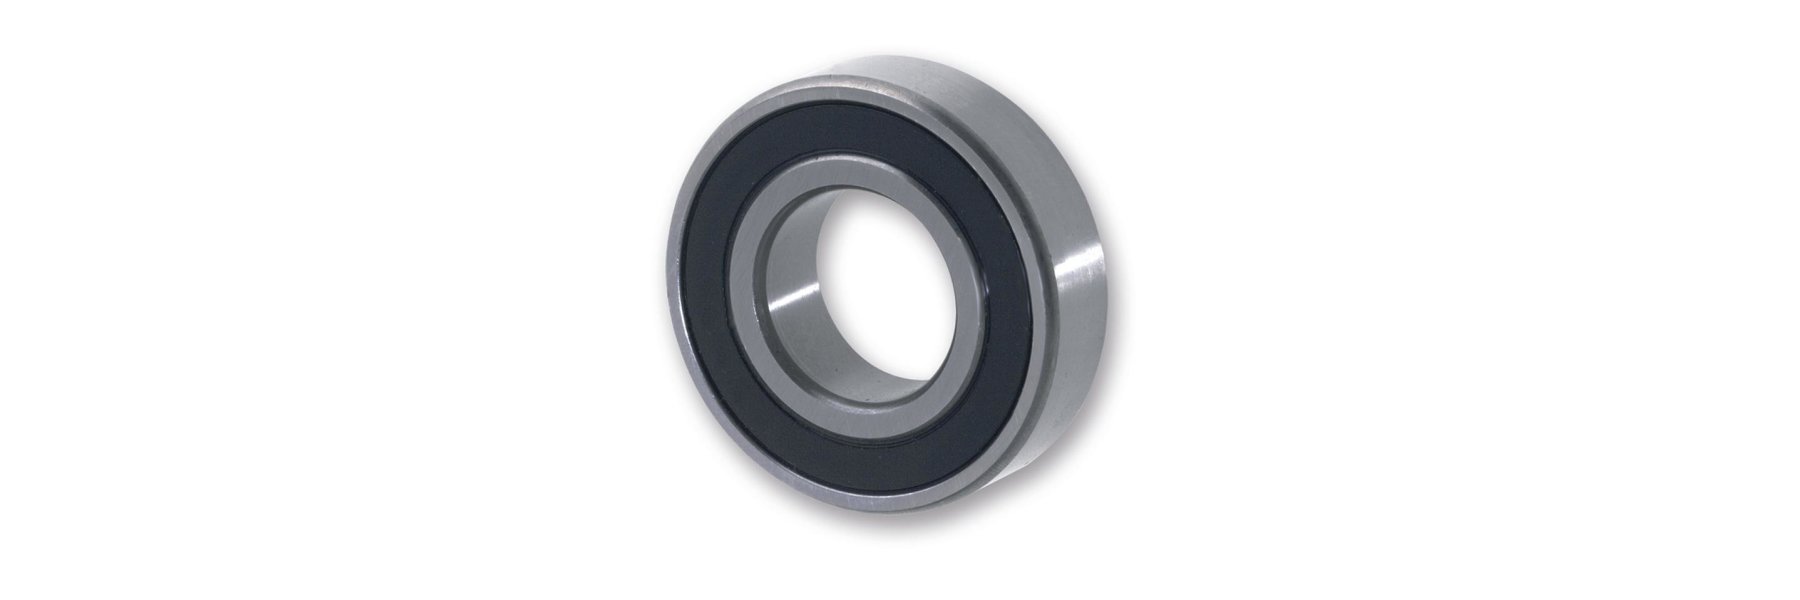 Stainless steel deep groove ball bearings DIN 625-1